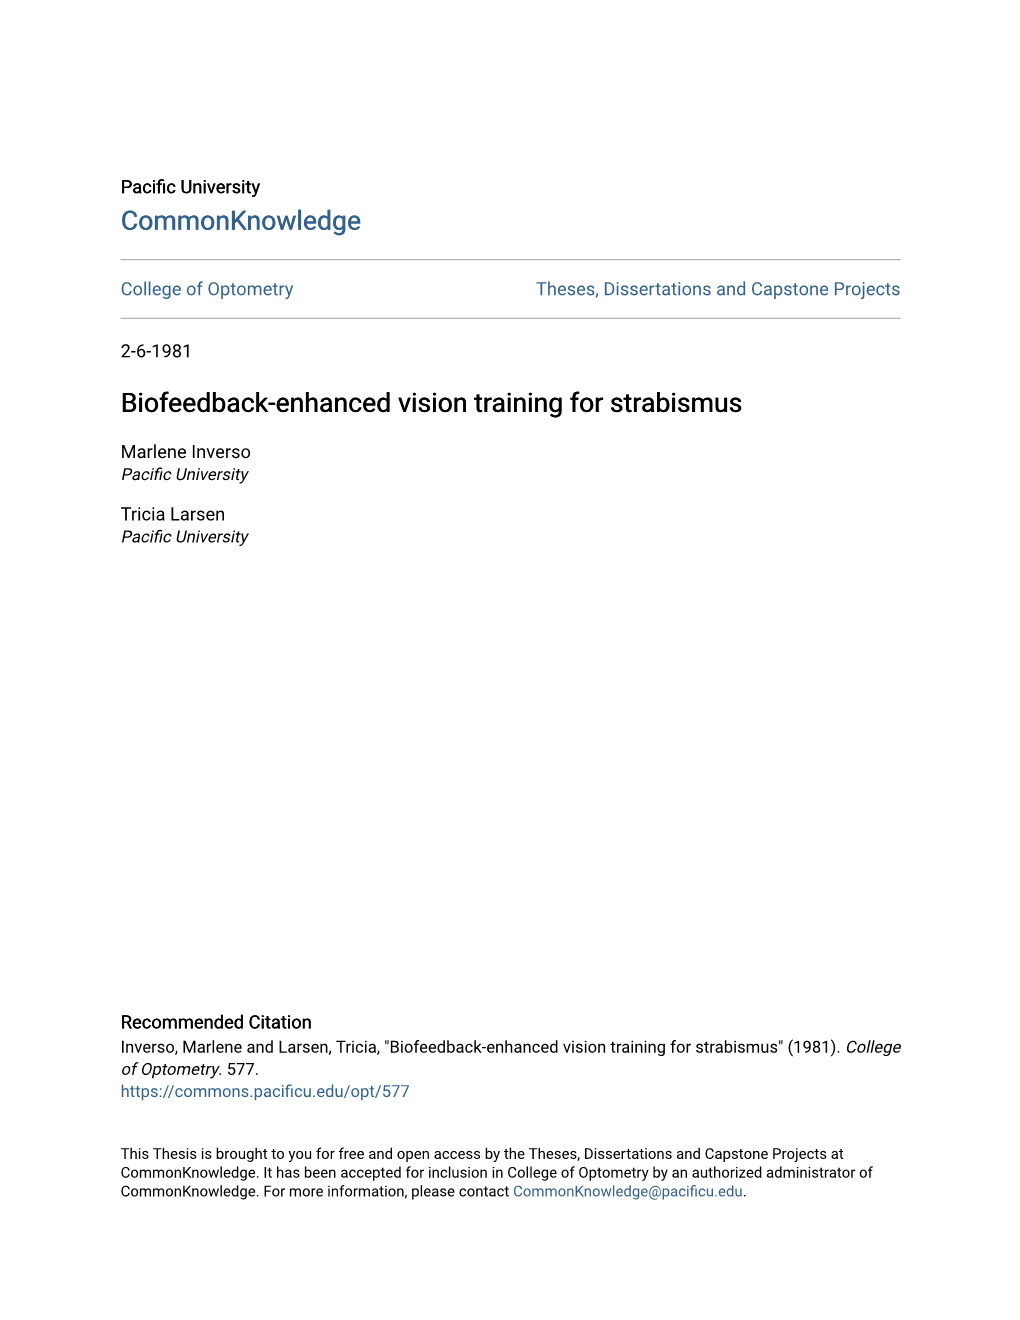 Biofeedback-Enhanced Vision Training for Strabismus